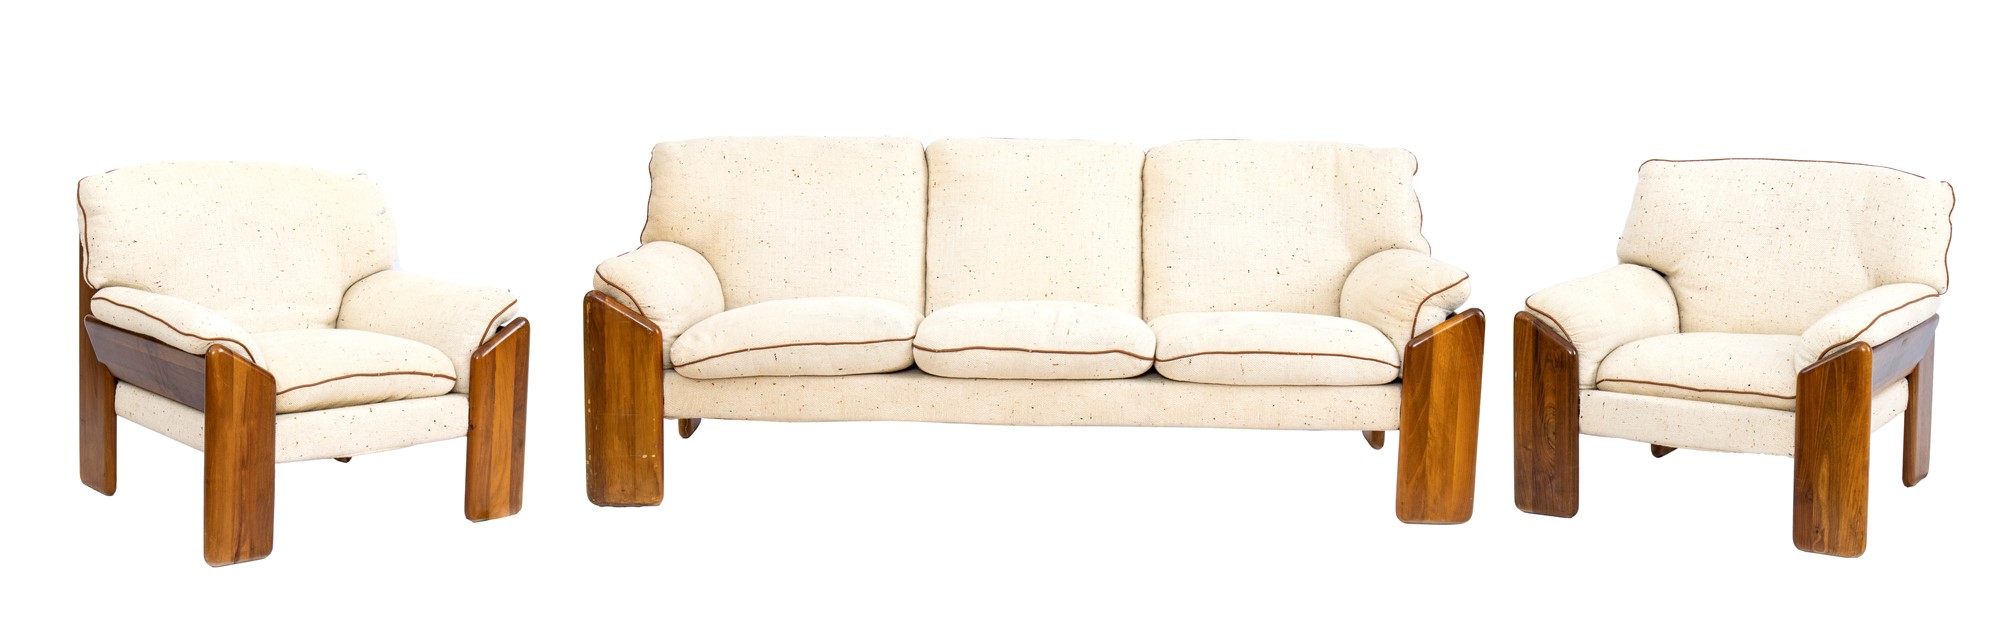 Mario Marenco Foggia 1933-2019 Lounge Furniture by Mobilgirgi consists of three-seater sofa and two - Bild 2 aus 23